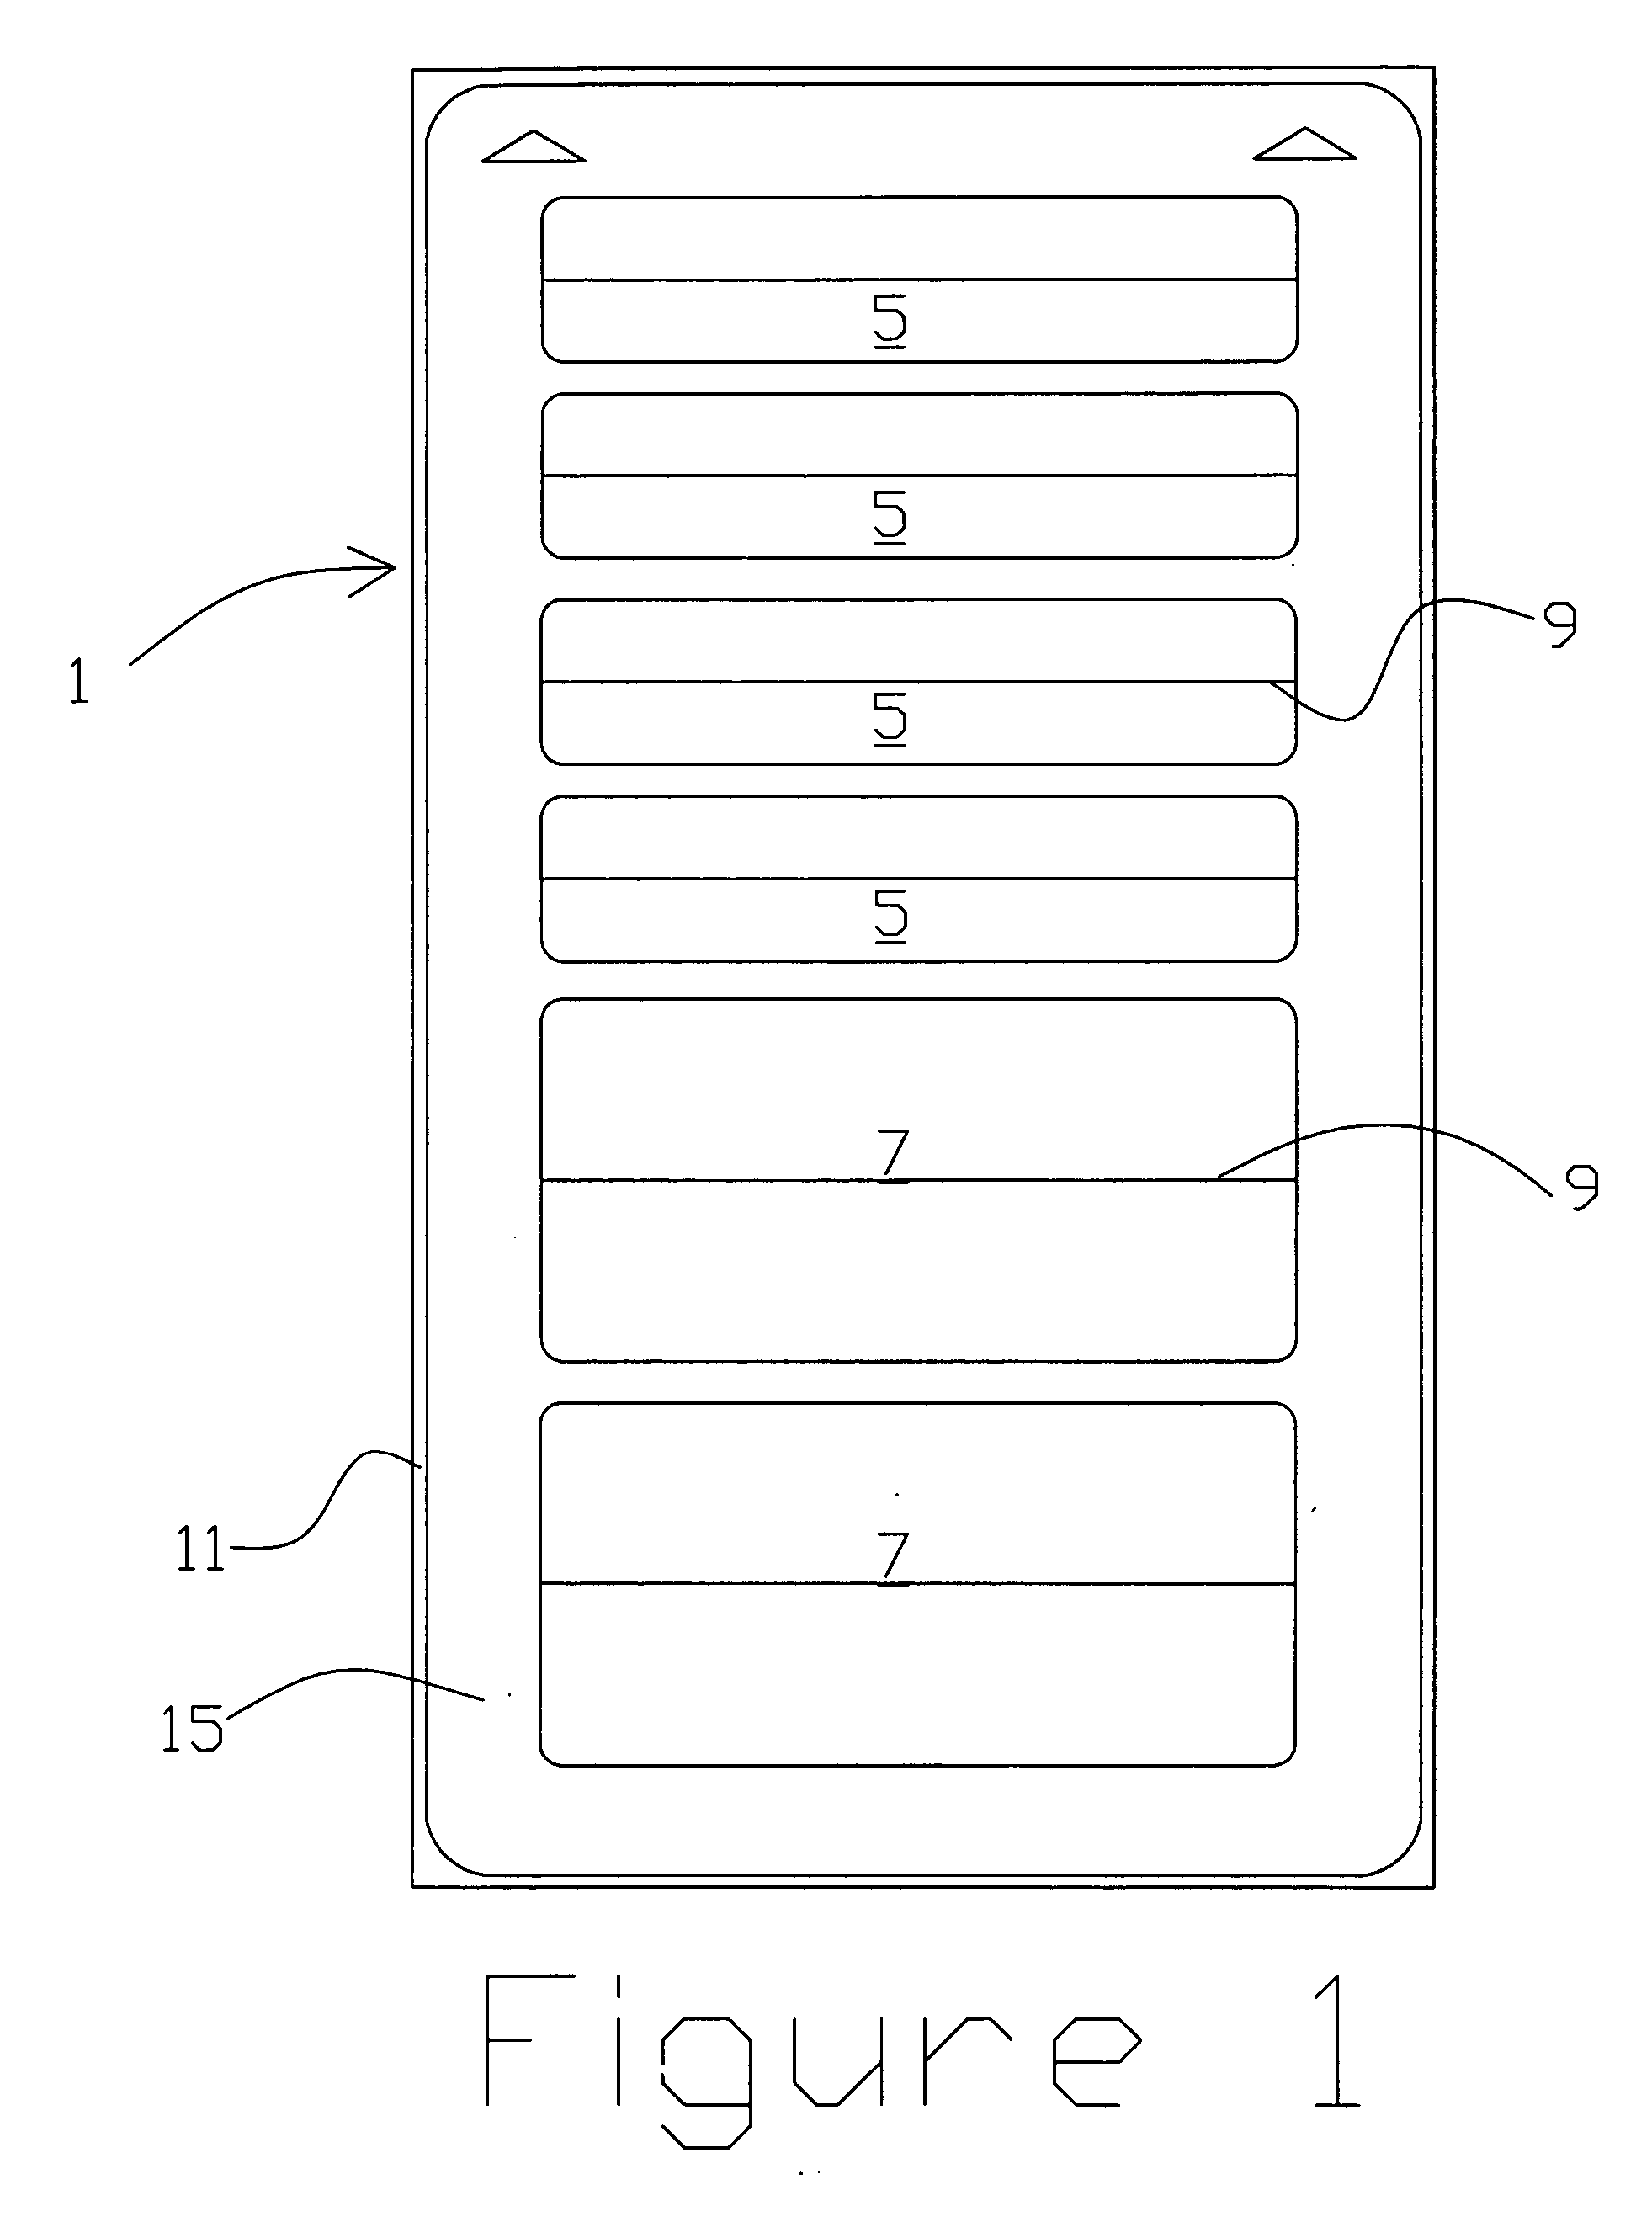 Multipurpose label sheet form